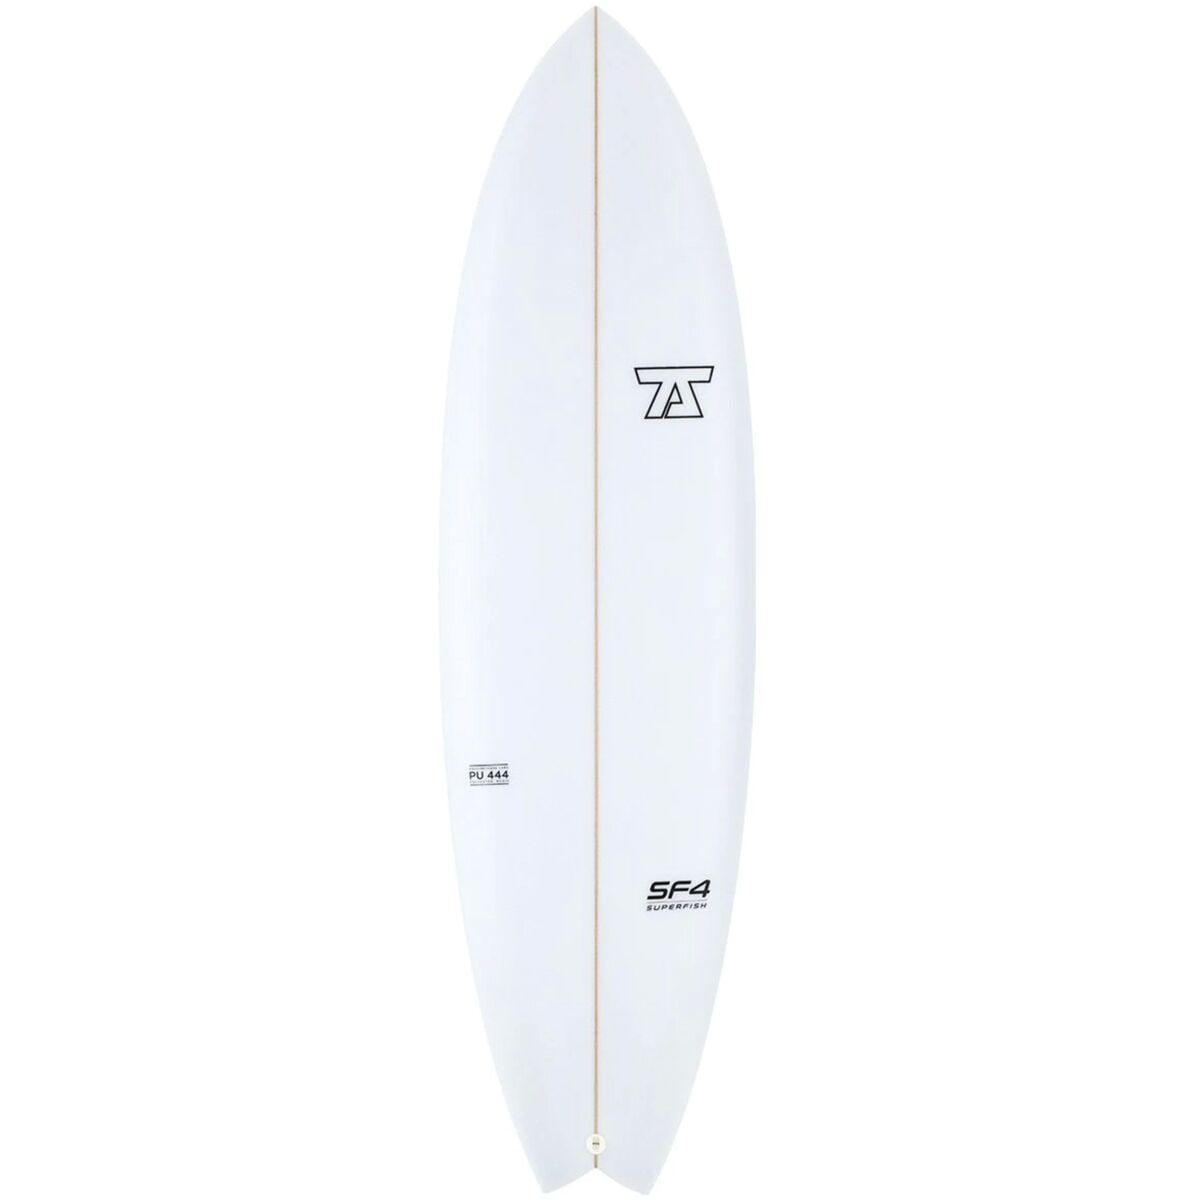 7S Super Fish 4 Shortboard Surfboard